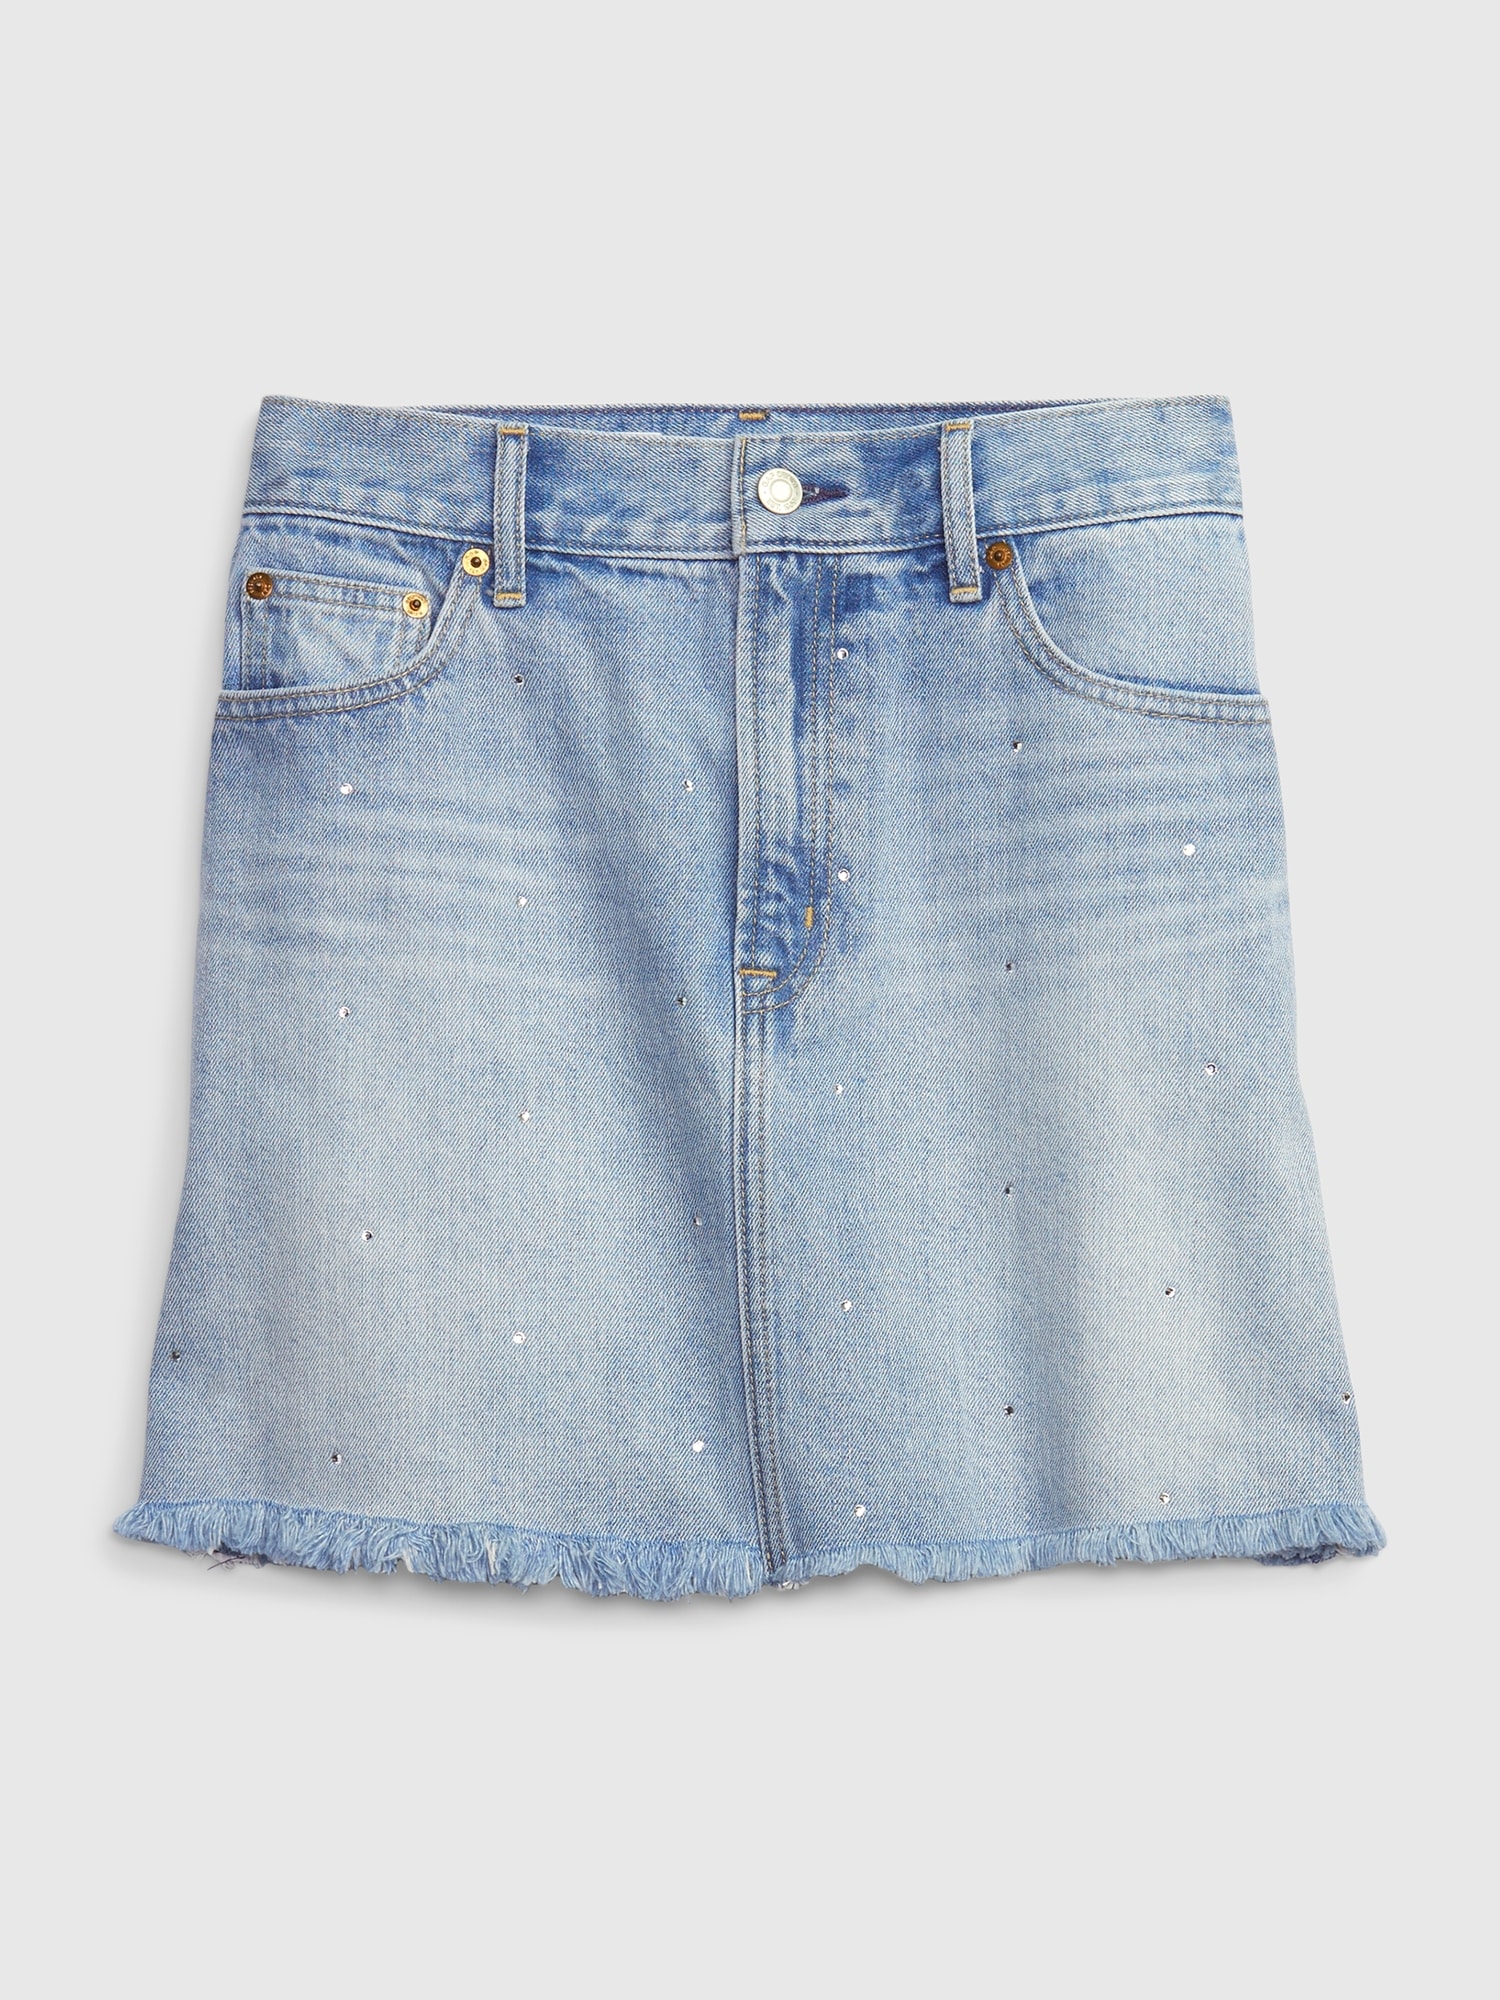 Rhinestone Denim Mini Skirt with Washwell | Gap